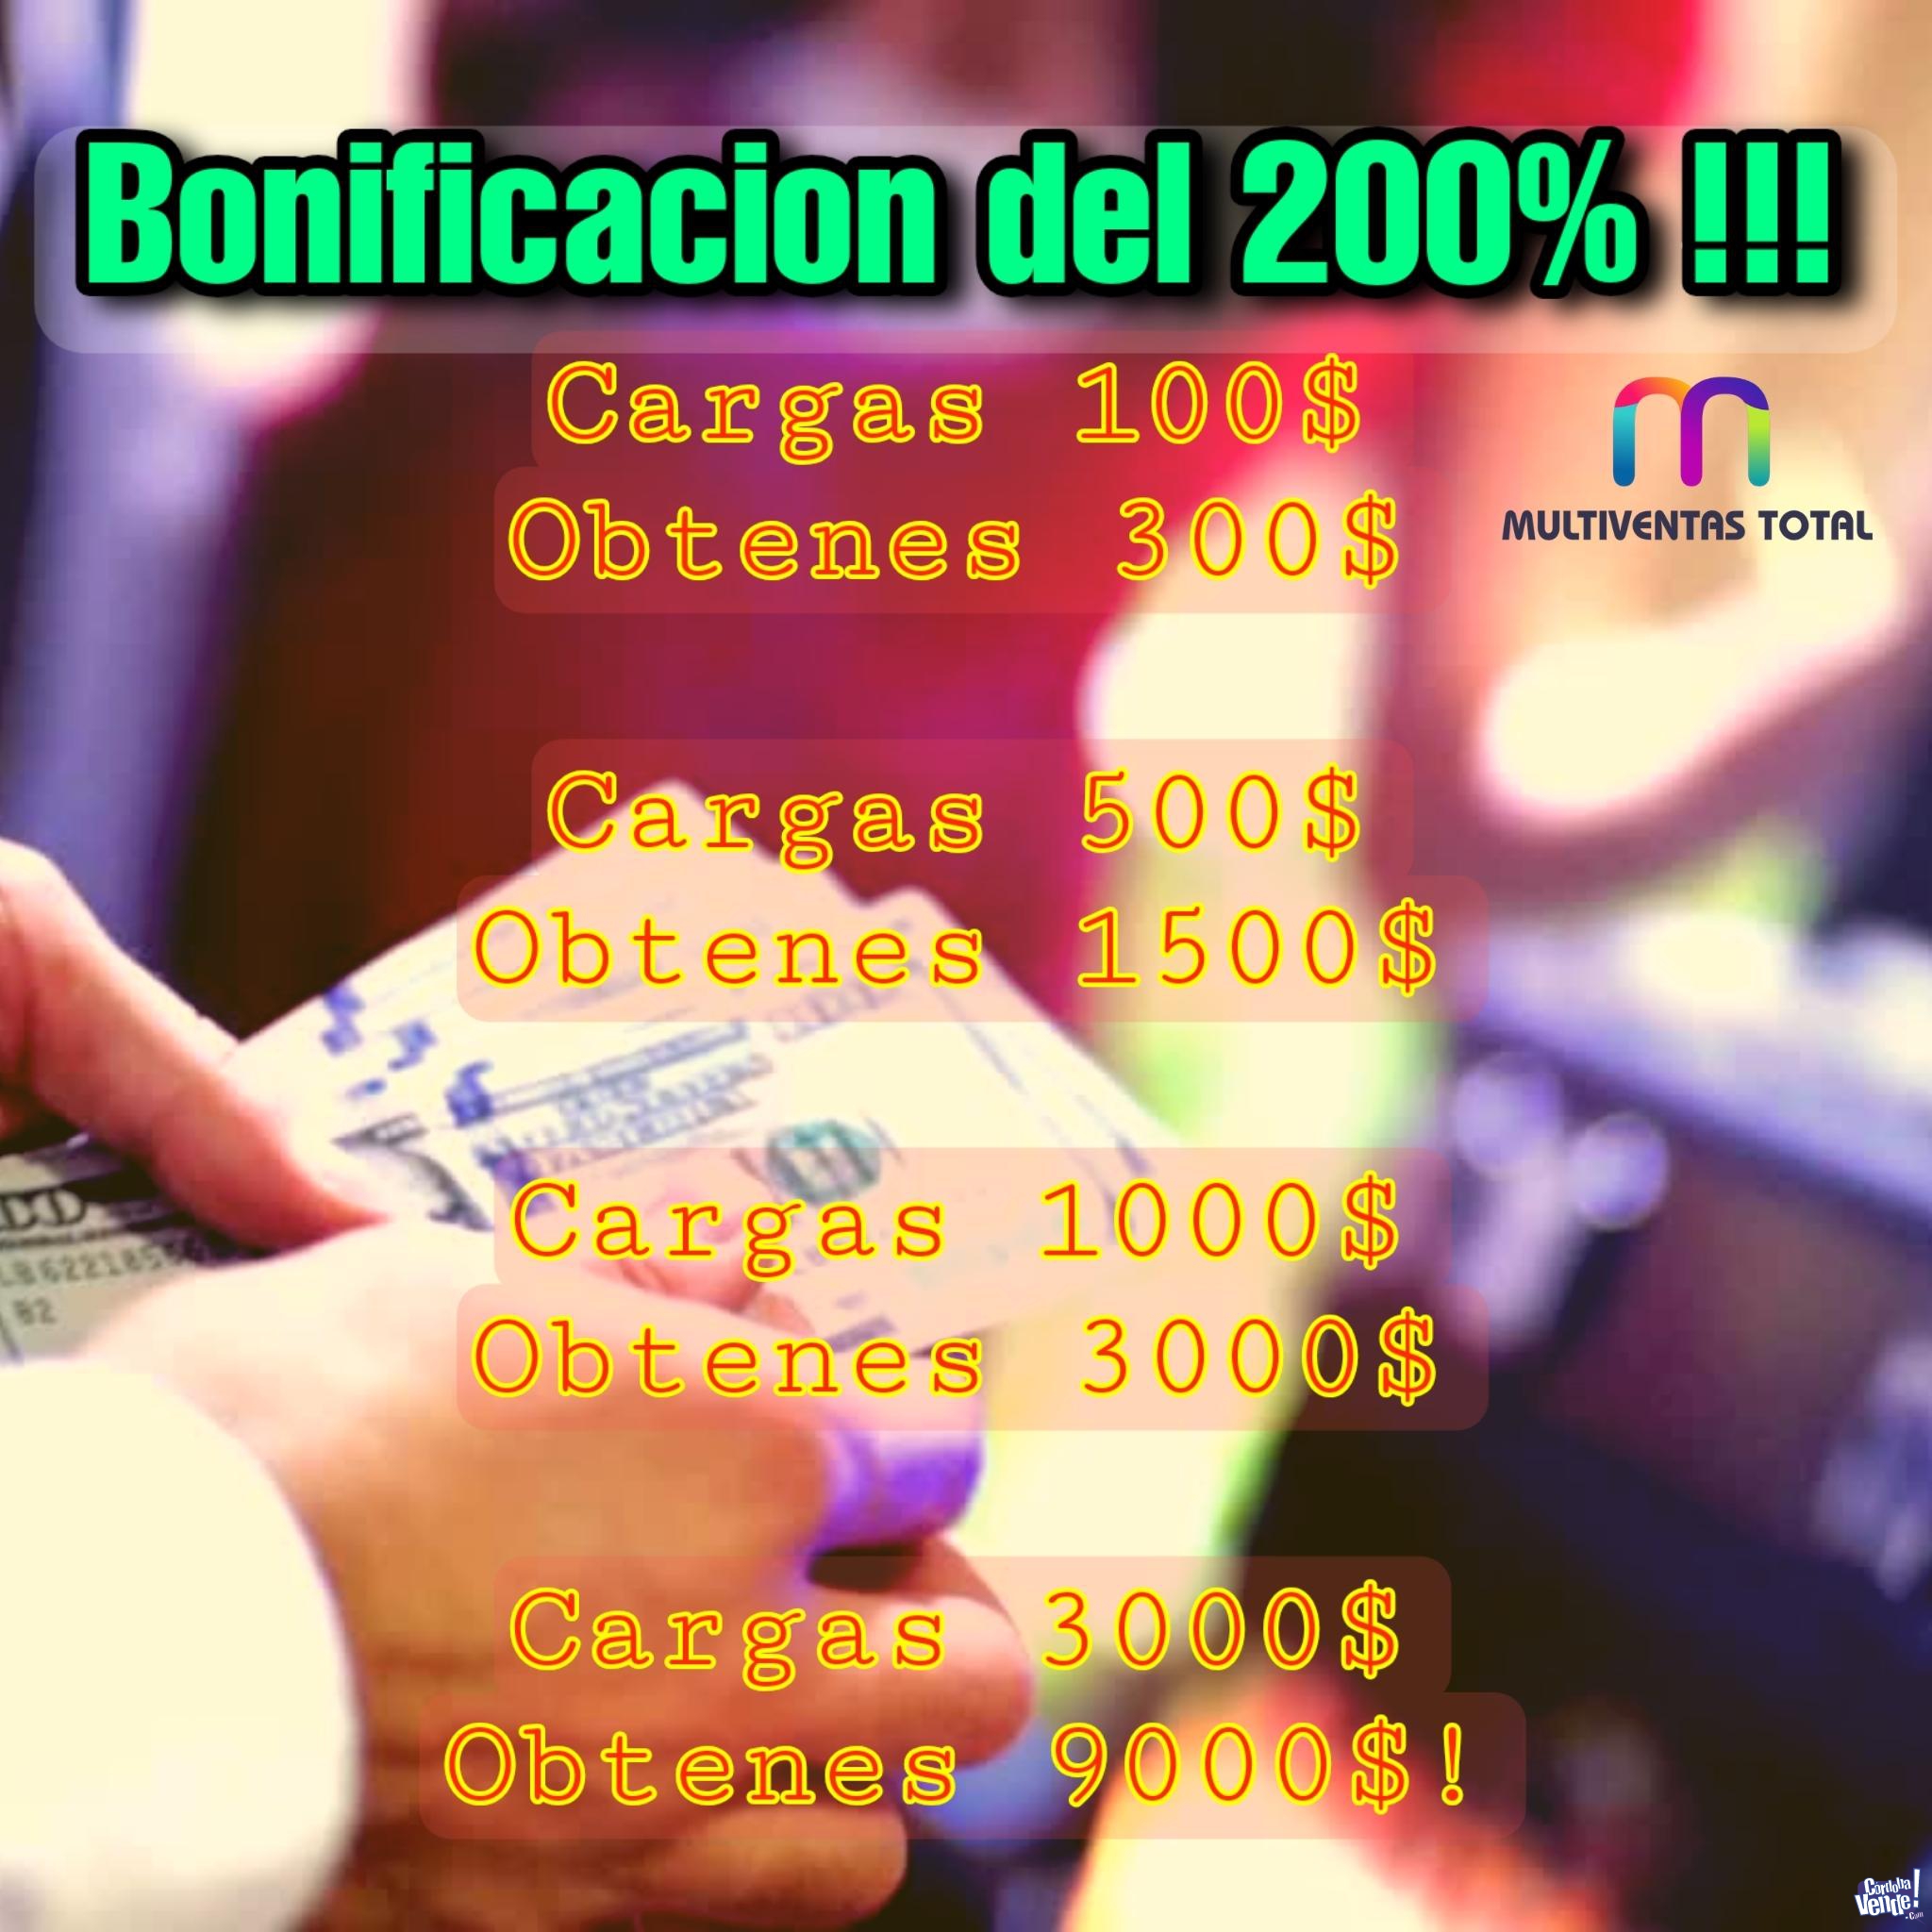 Casino Online! en Córdoba Vende